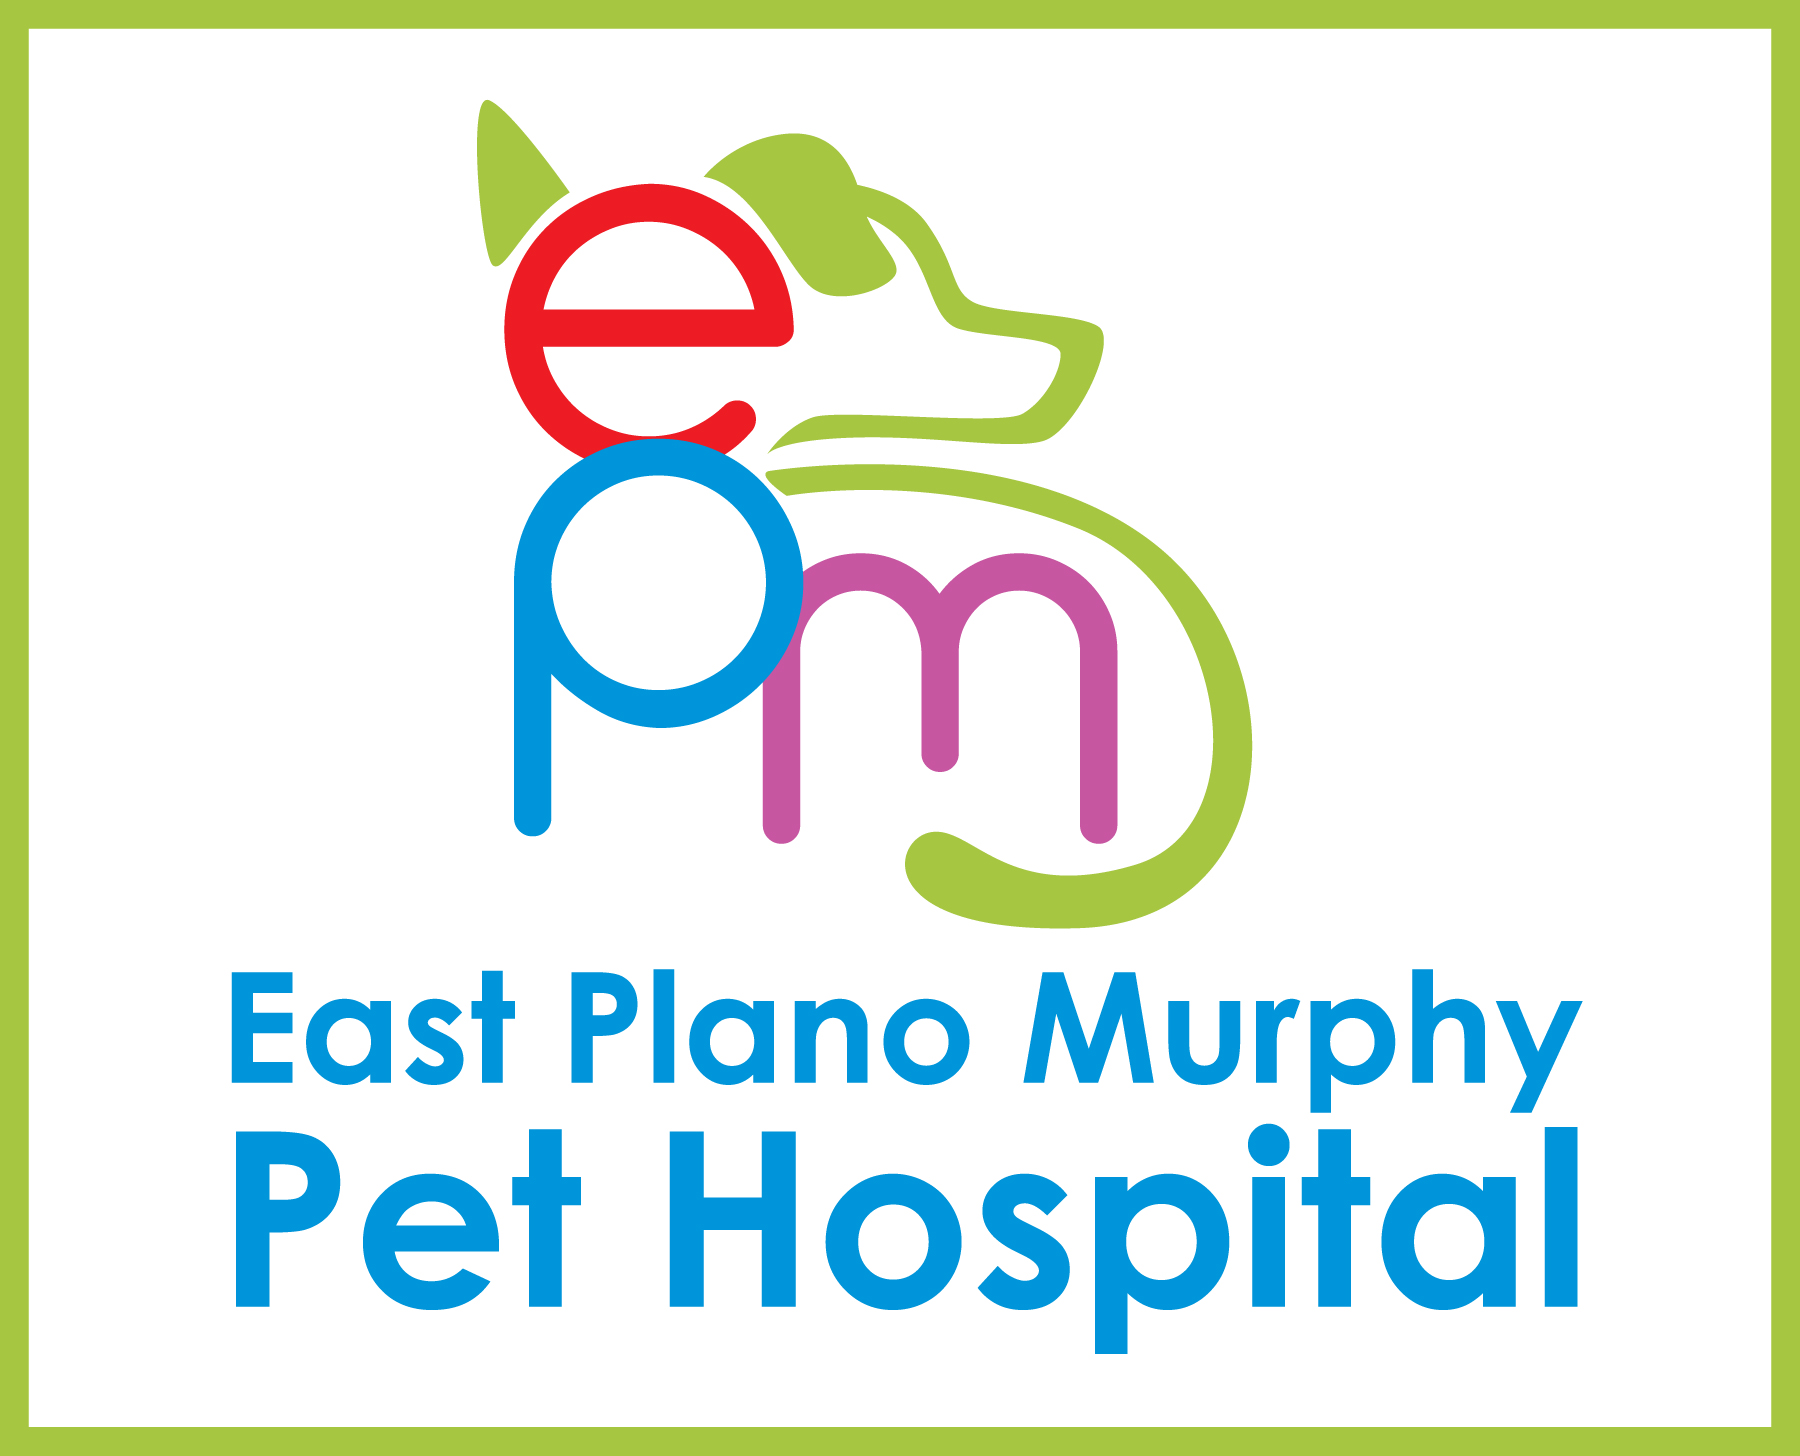 East Plano Murphy Pet Hospital